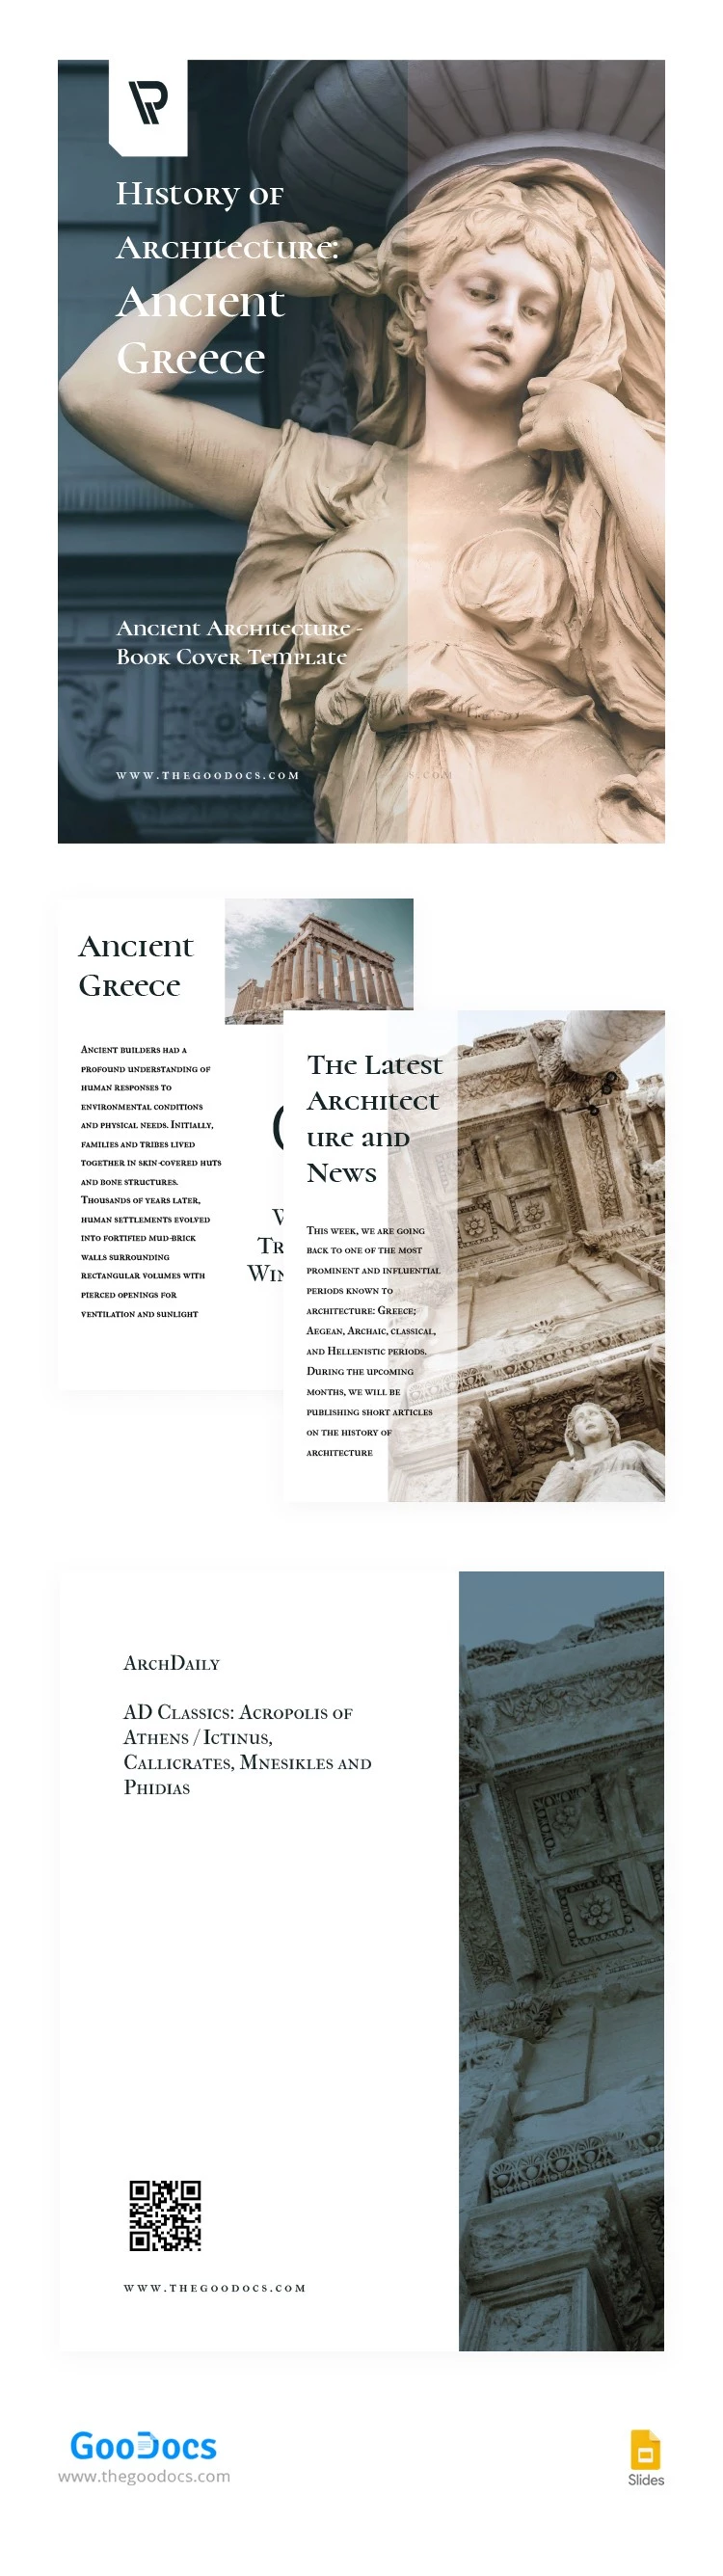 Libro de Arquitectura Antigua - free Google Docs Template - 10062764